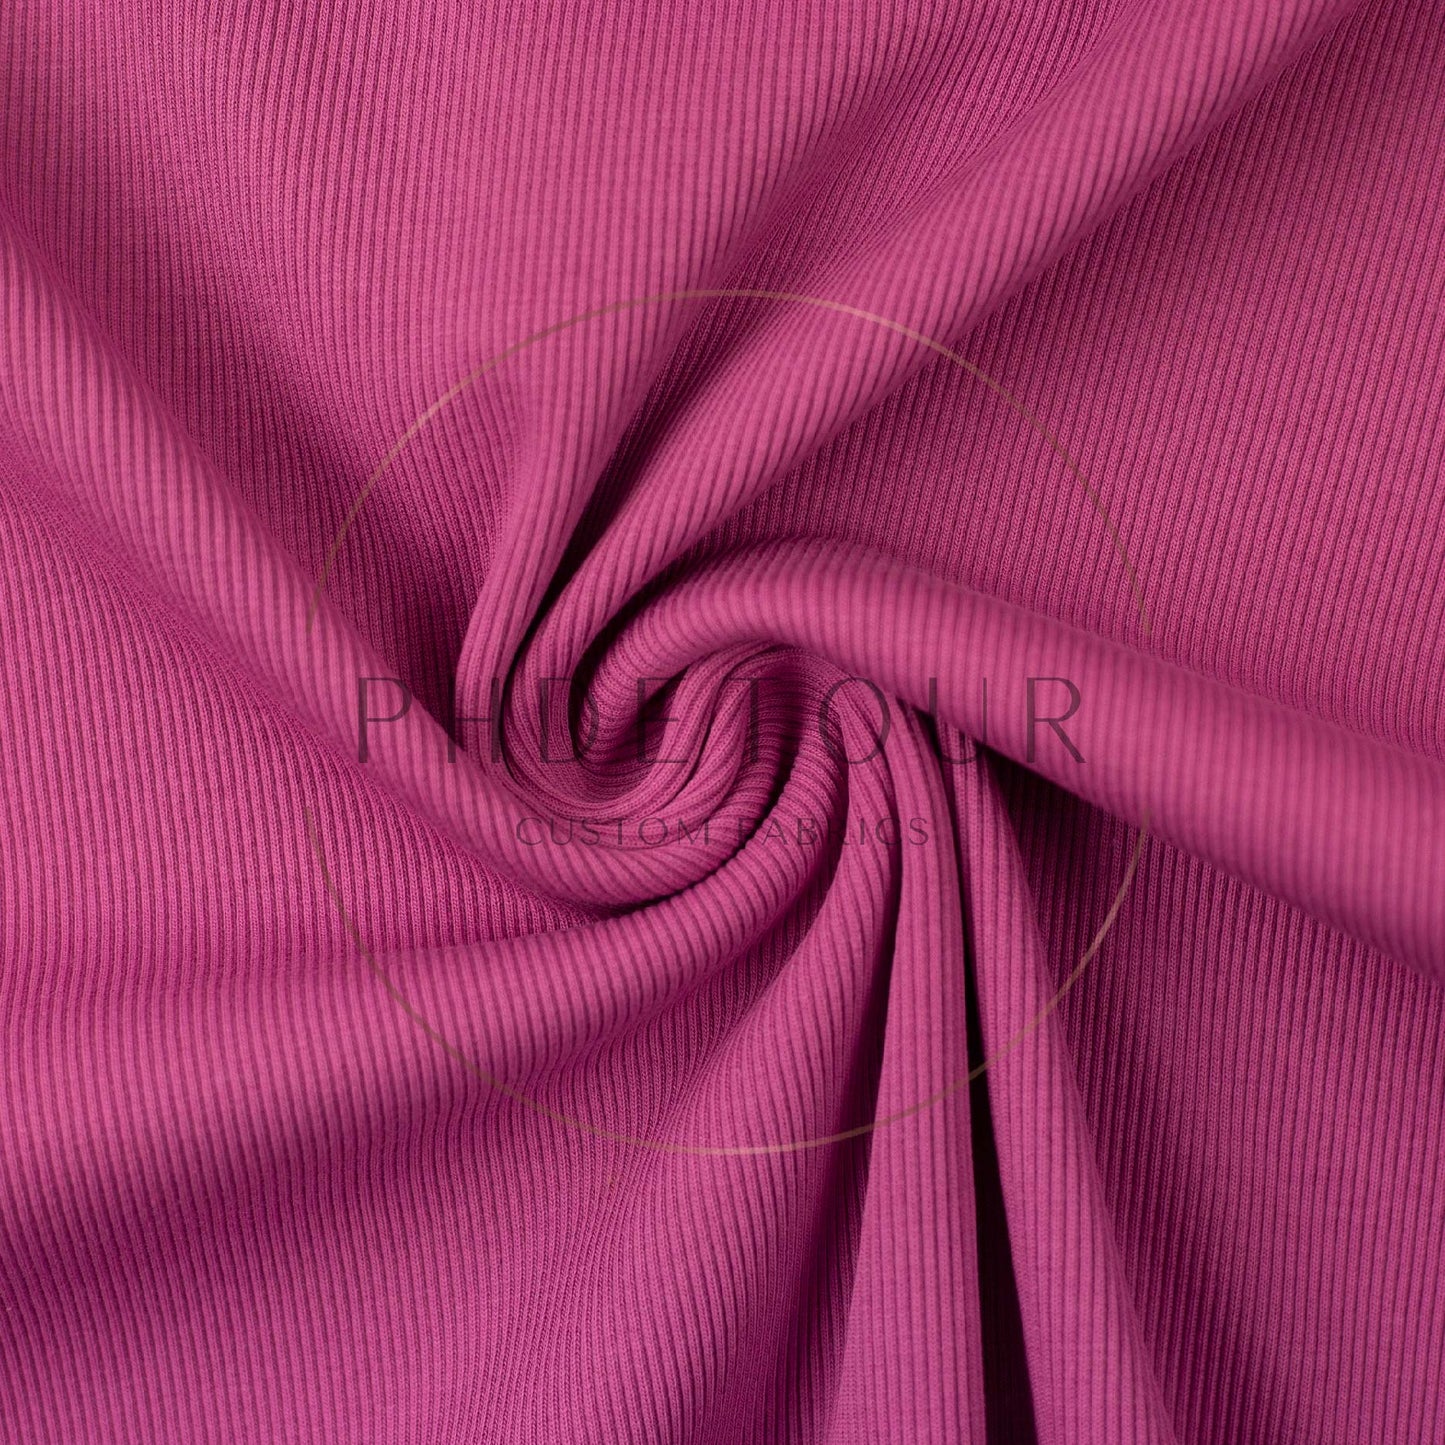 933 - Berry - European 2x1 Sweatshirt Ribbing